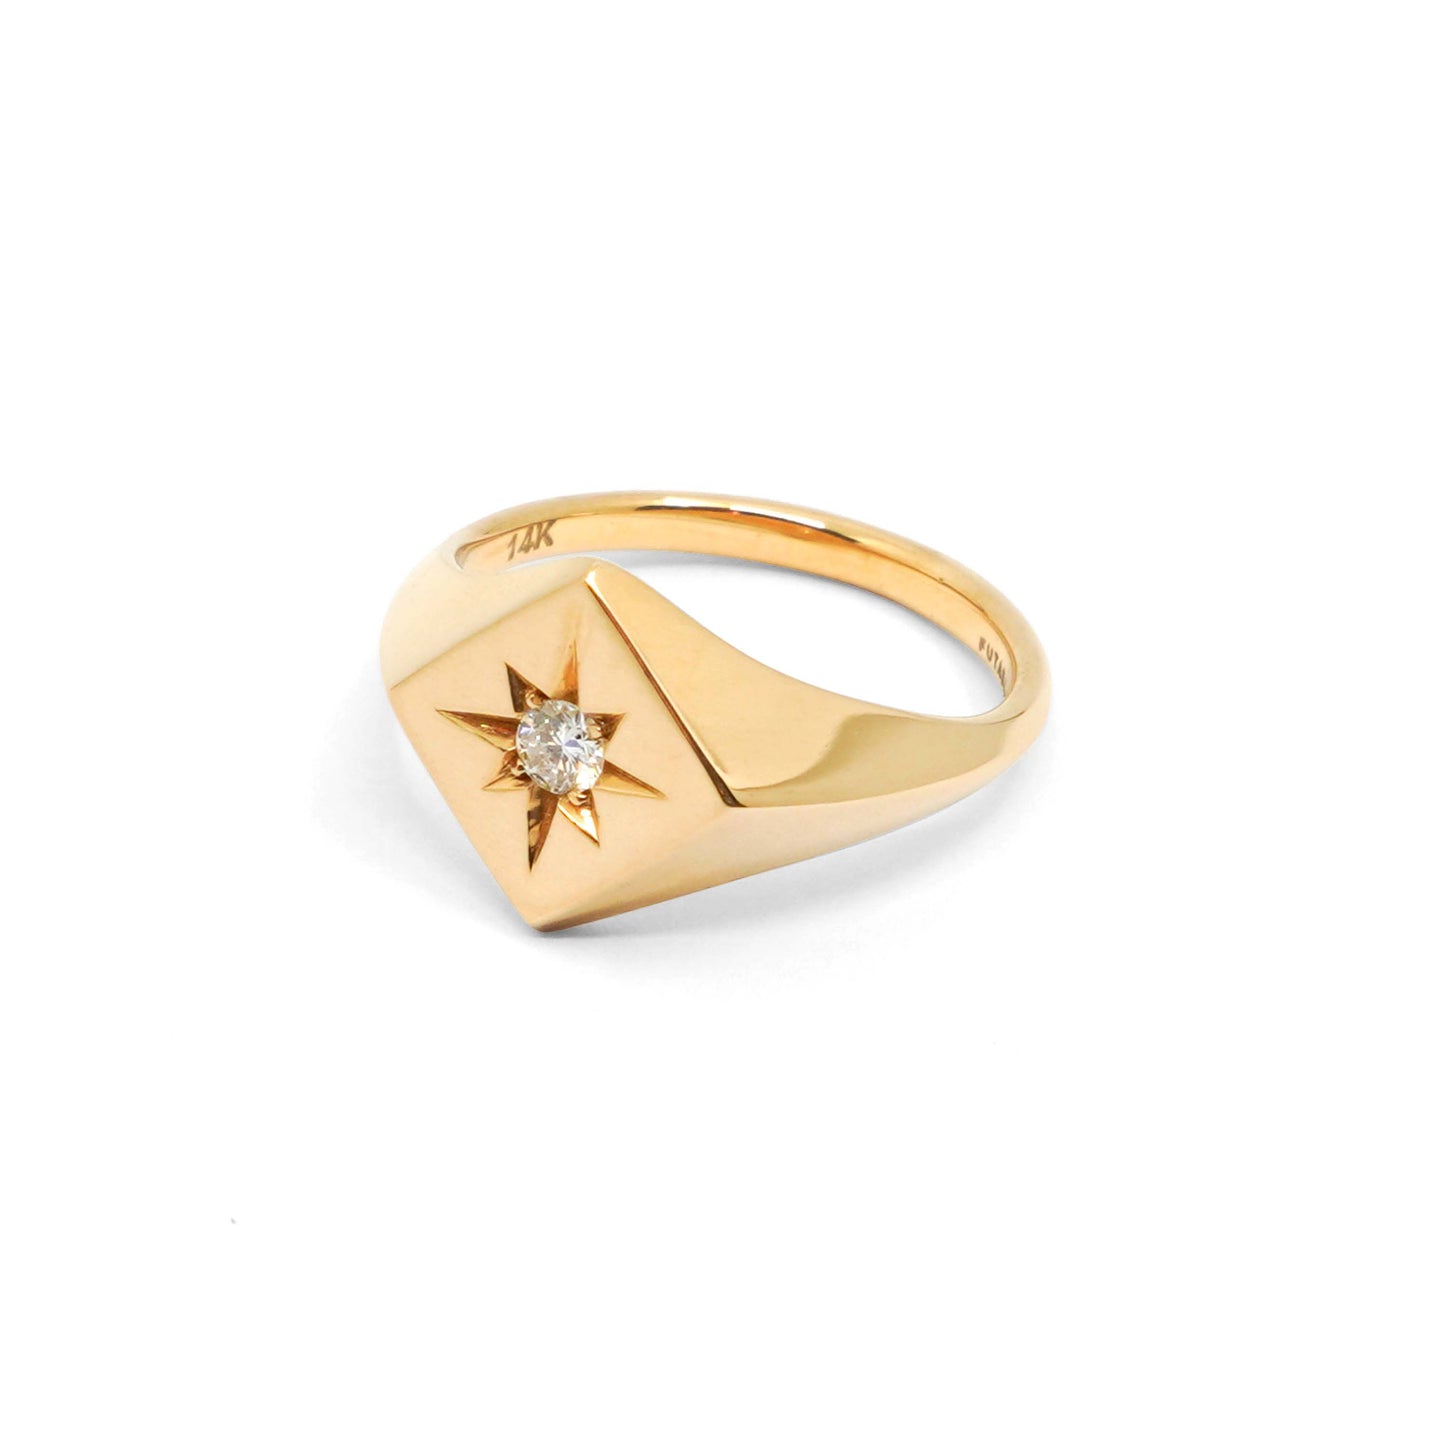 North Star Signet Ring with White Diamond - Futaba Hayashi